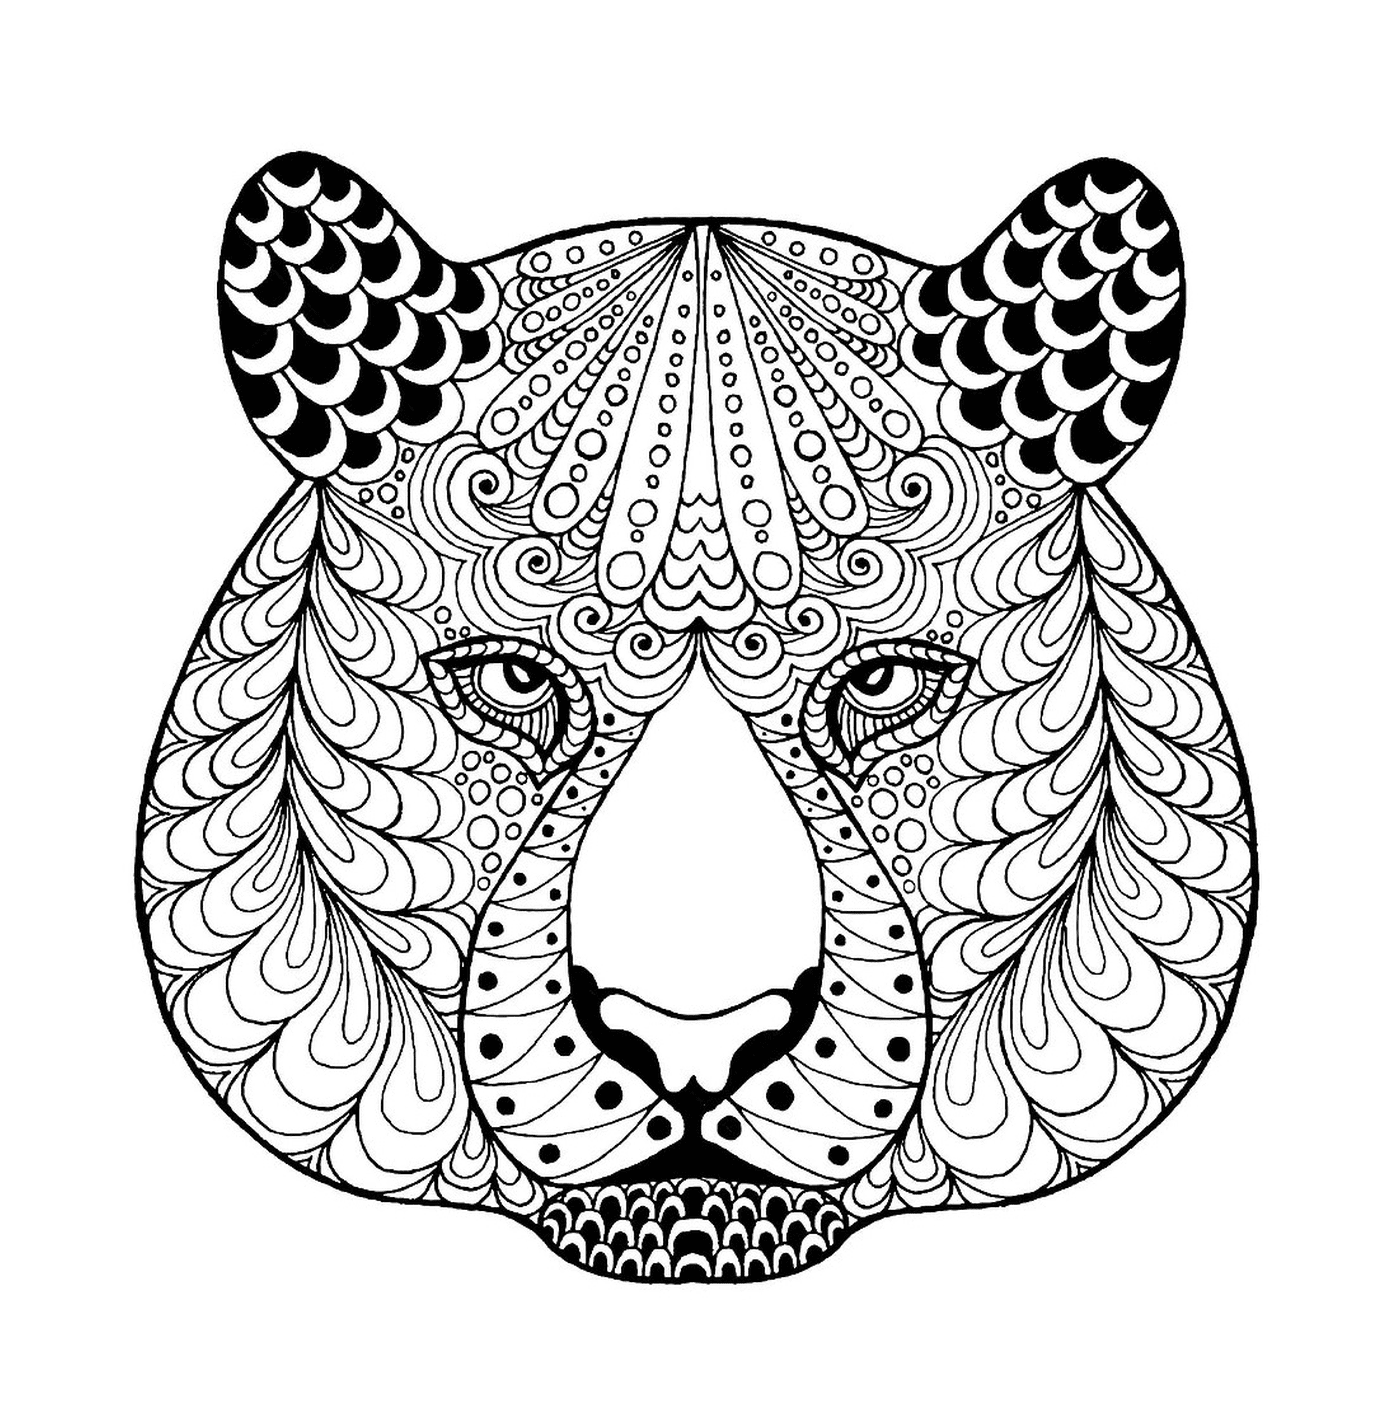  Зентанглая голова тигра с рисунками 